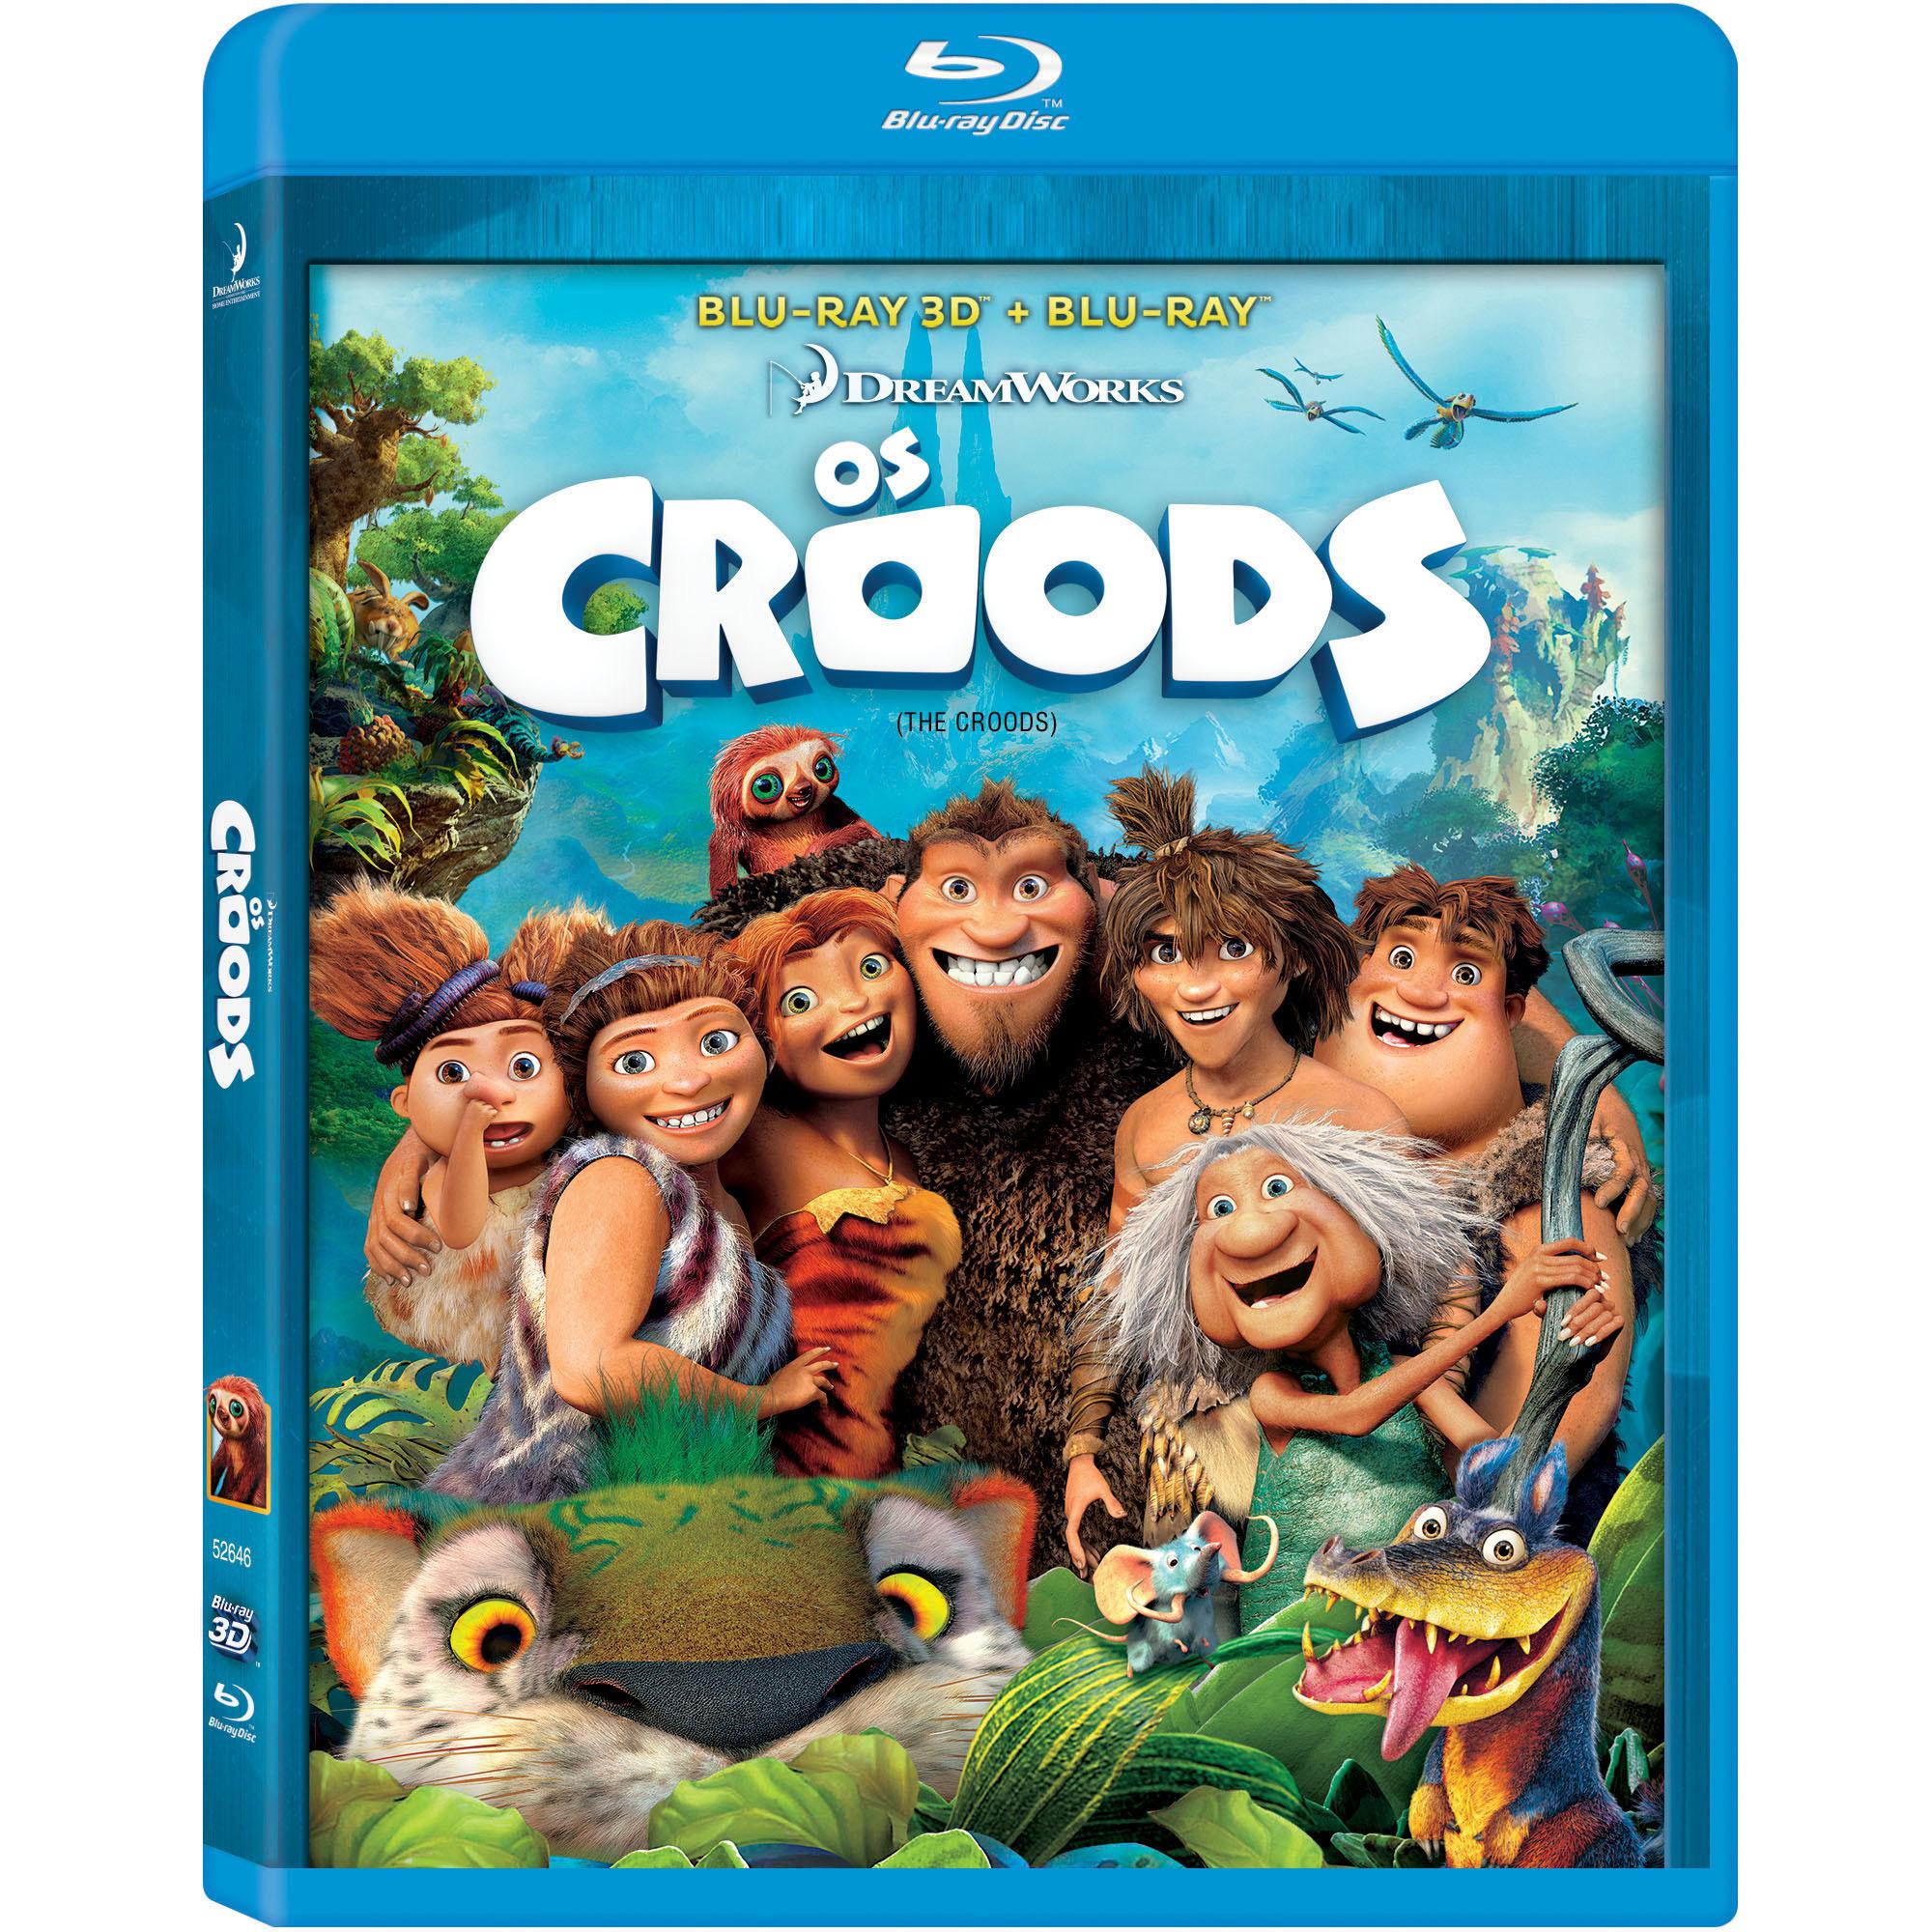 Blu-Ray 3D - Os Croods (Blu-Ray 3D + Blu-Ray) é bom? Vale a pena?